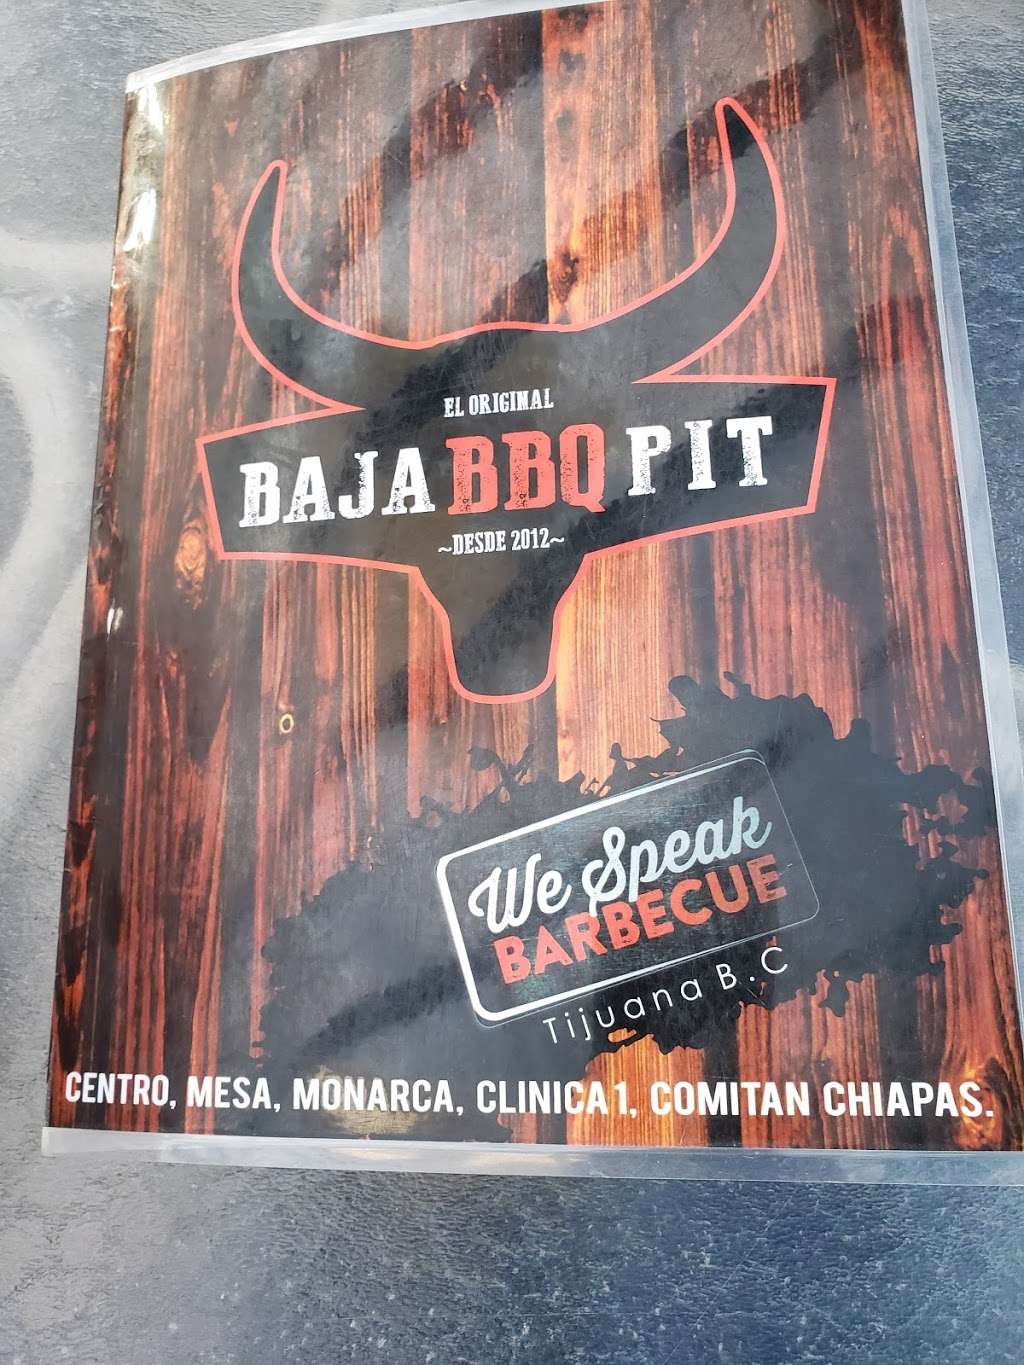 BAJA BBQ PIT LA MESA | Calle Benito Juarez 17, Jose Sandoval, 22105 Tijuana, B.C., Mexico | Phone: 664 830 7078